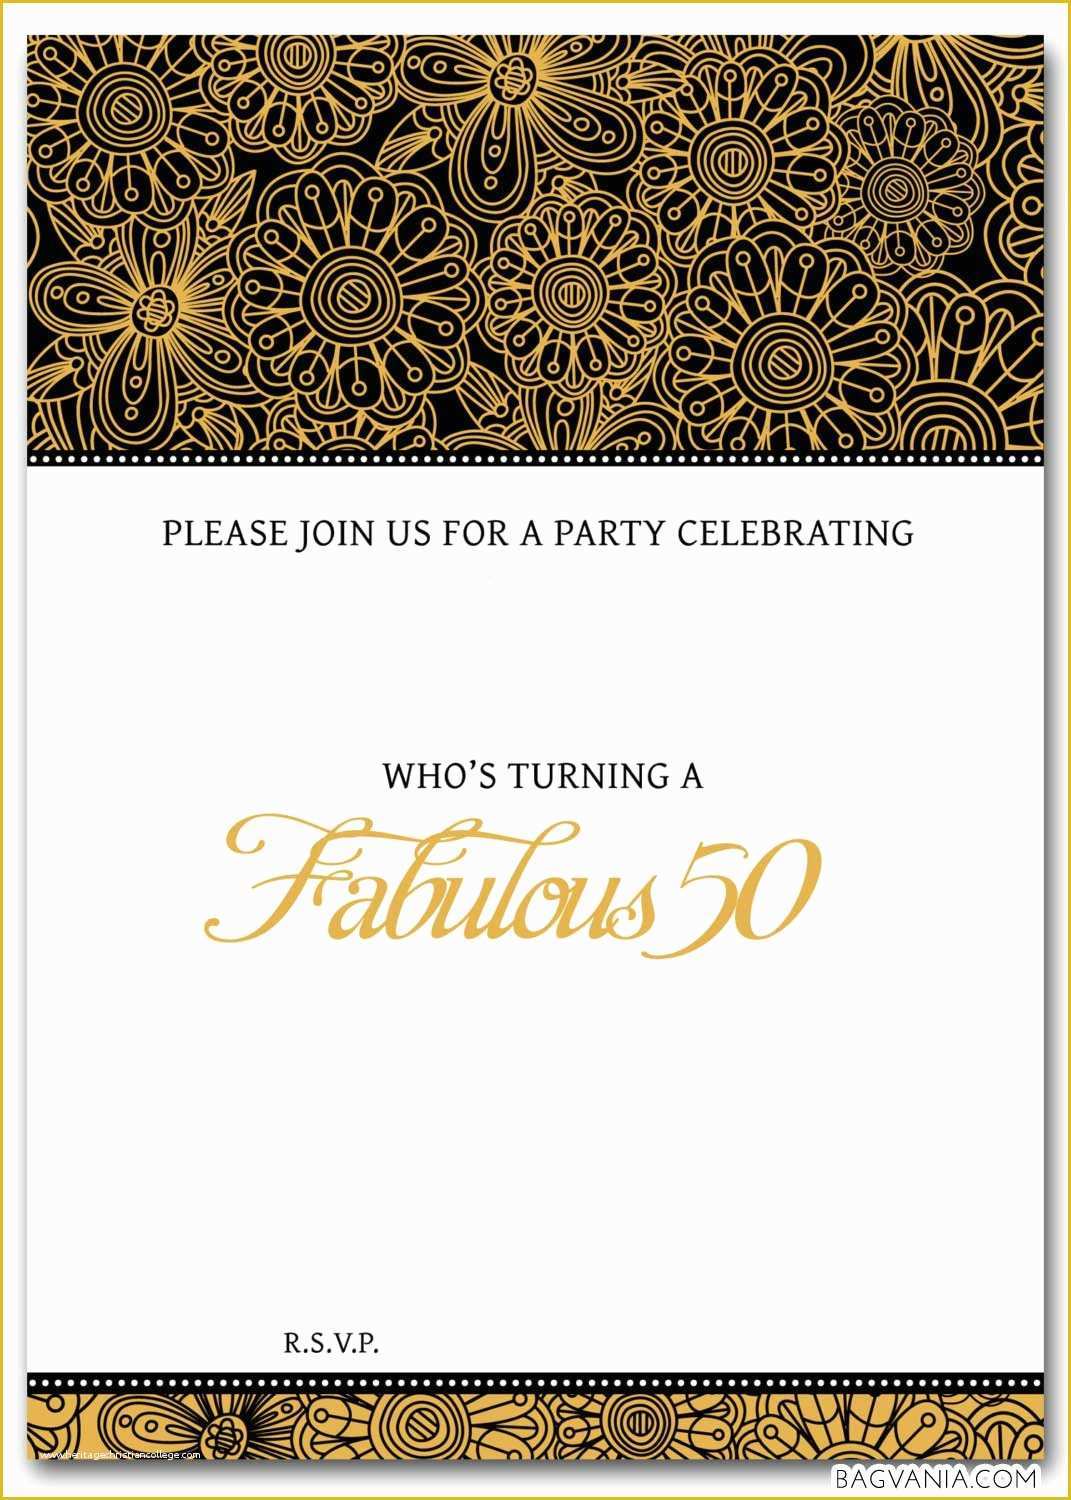 Free Birthday Invitations Templates to Print Of Free 50th Birthday Party Invitations Wording – Free